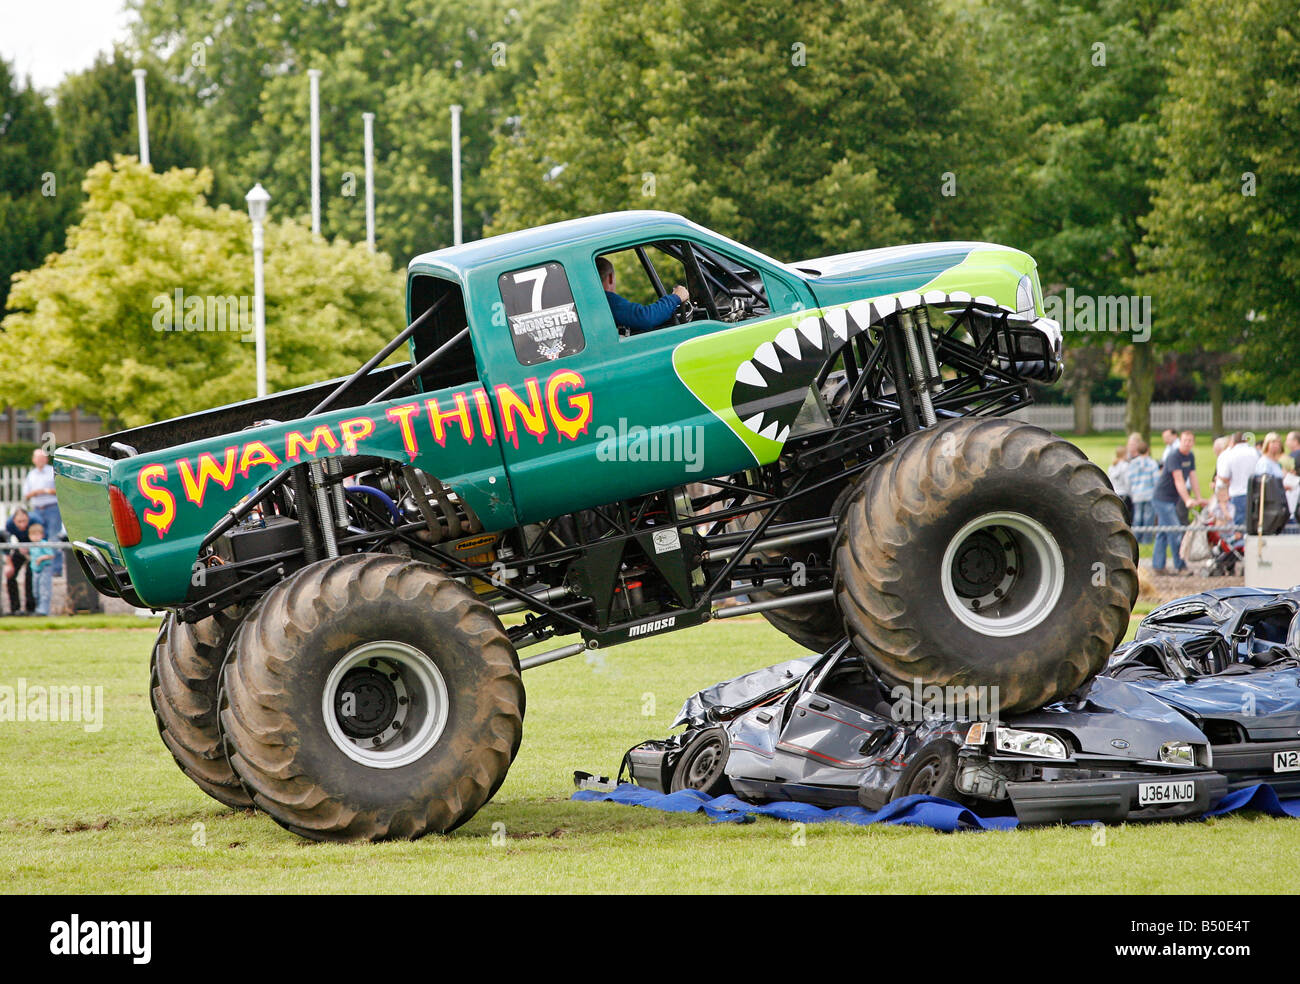 Monster truck crushing cars Stock Photo - Alamy